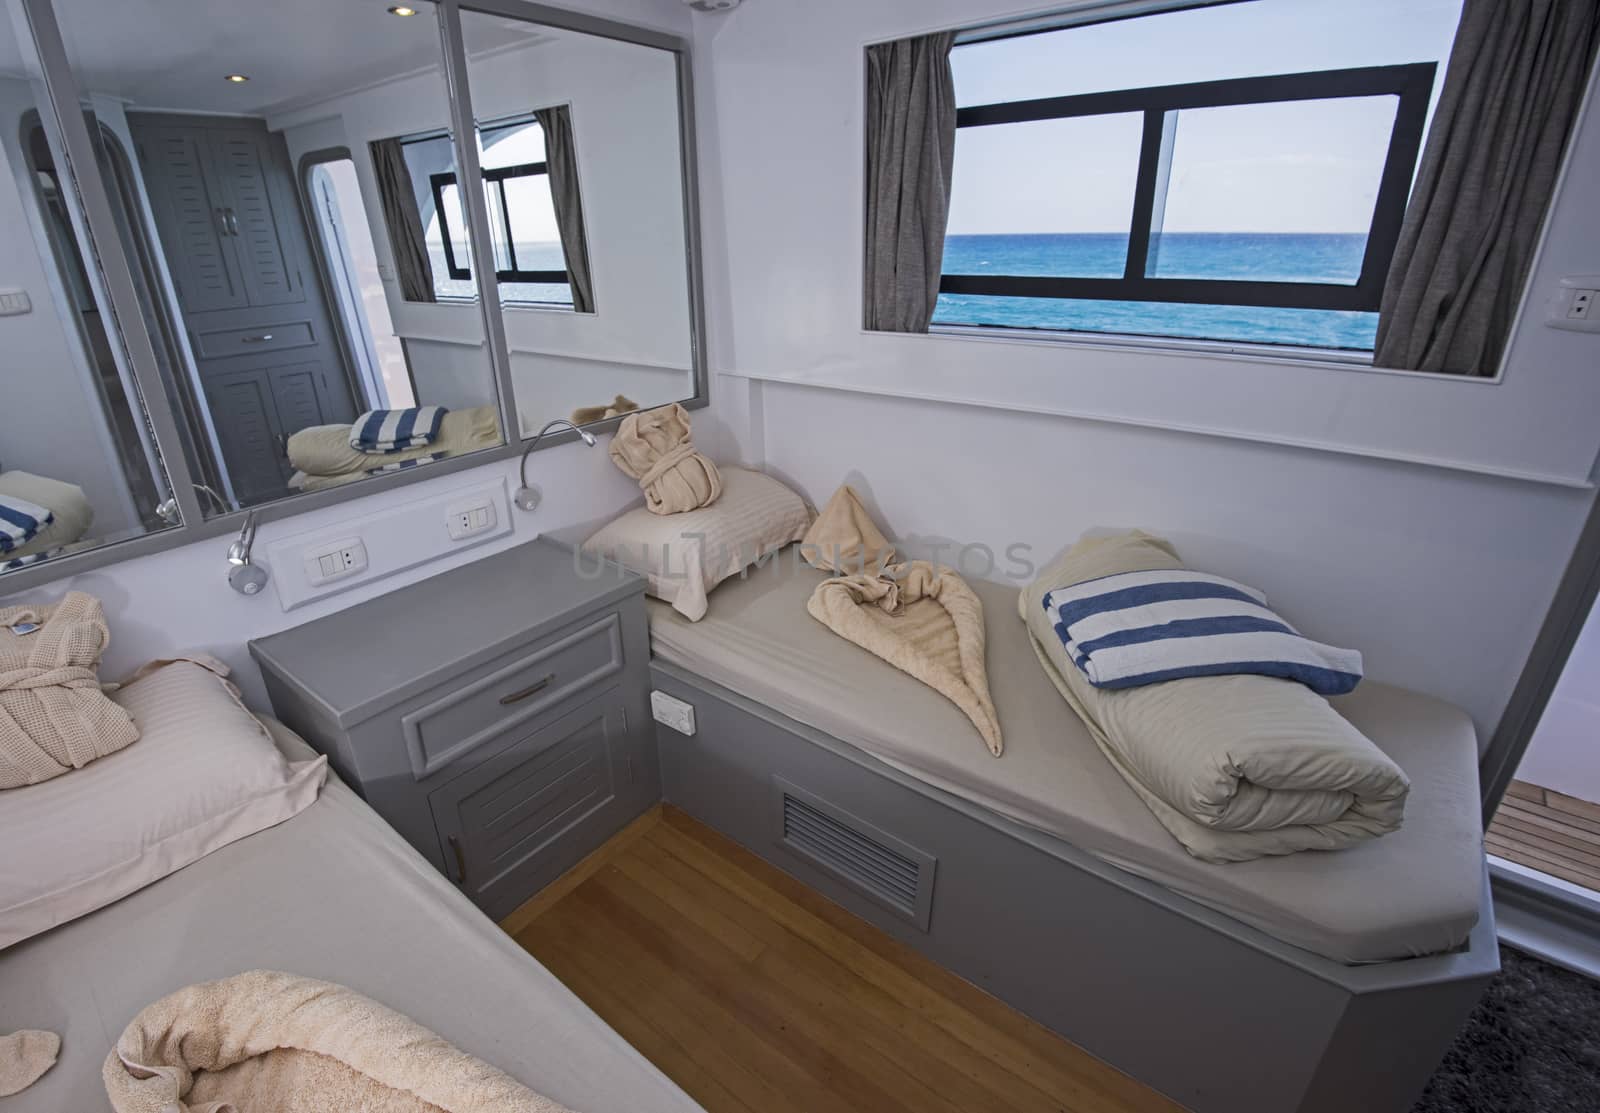 Cabin in a luxury private motor yacht by paulvinten